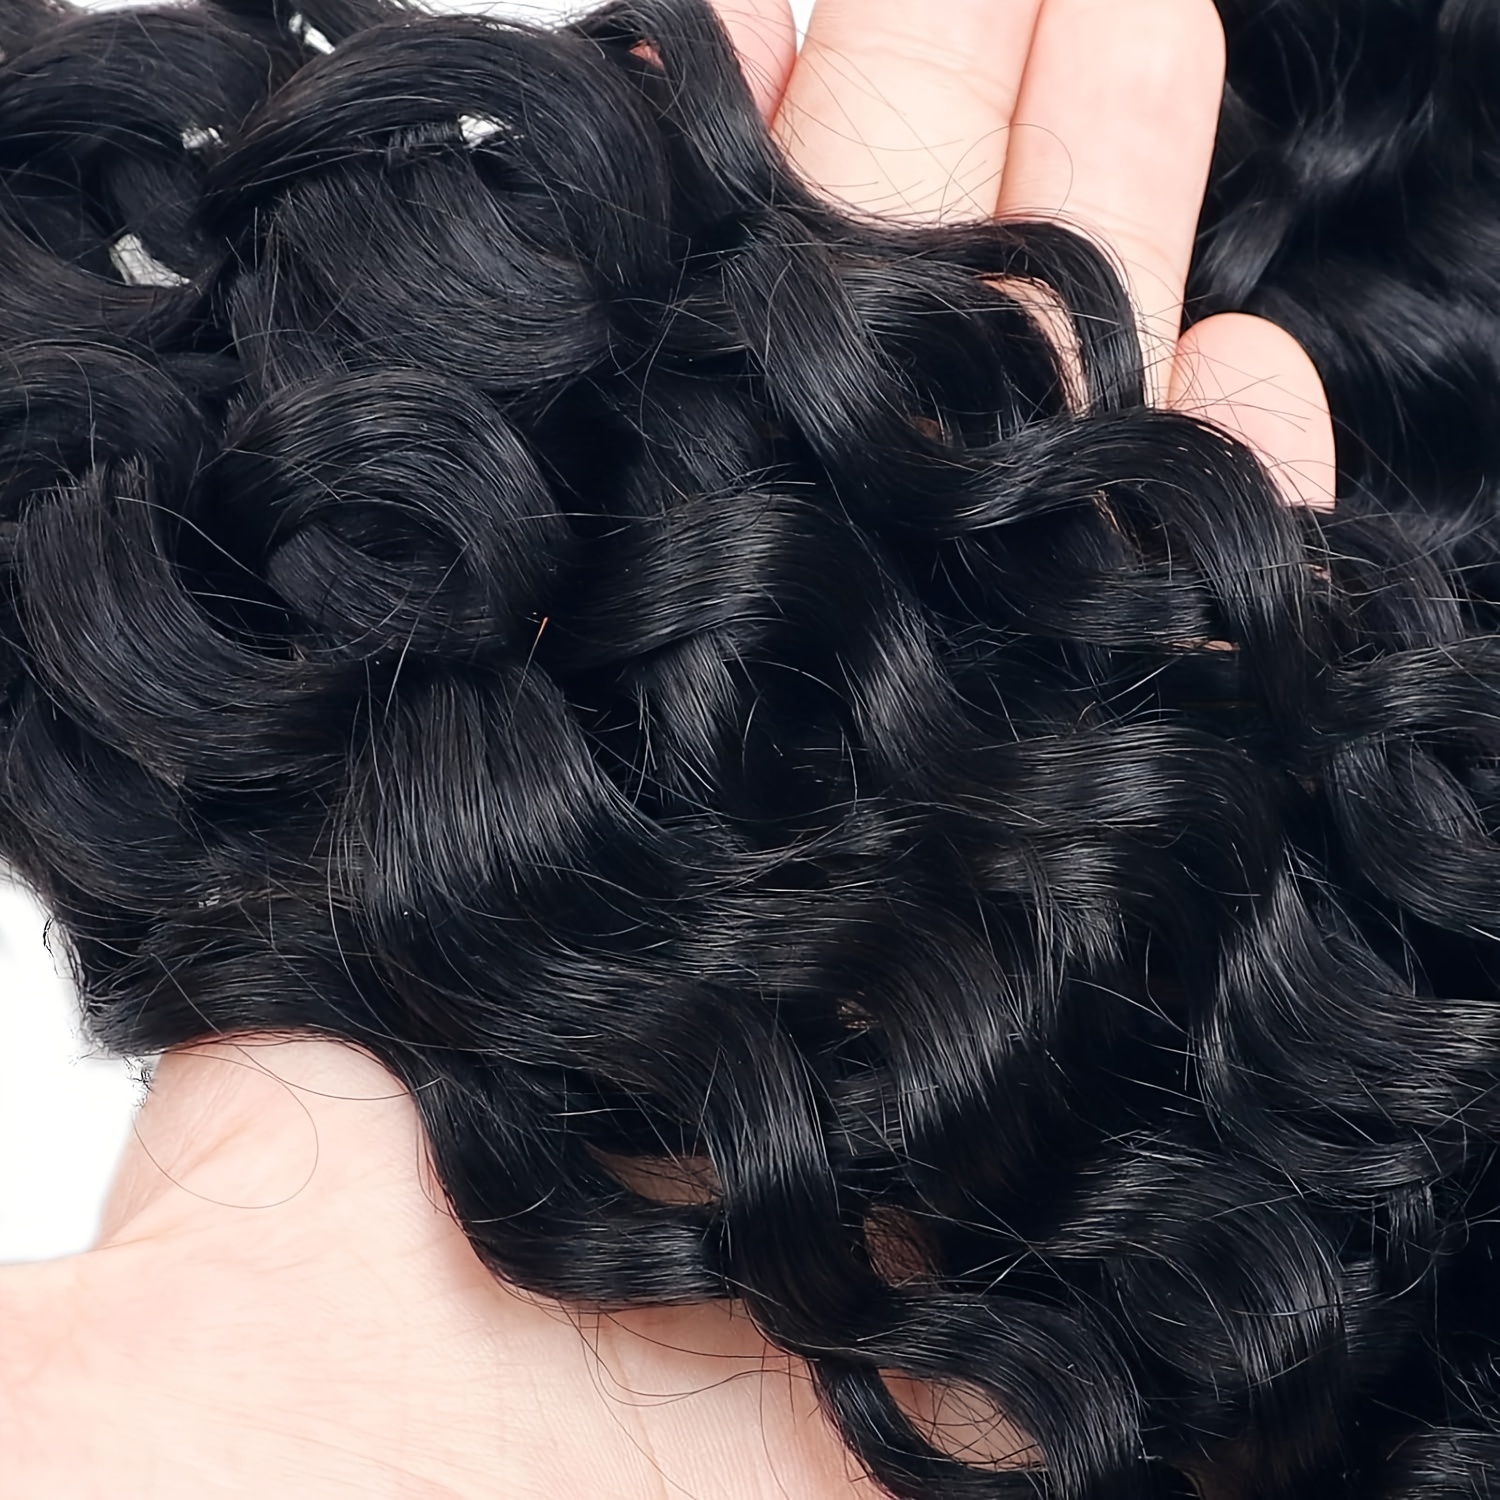 Buy Deep Wave Bulk Human Hair for Braiding No Weft 100g (2bundles